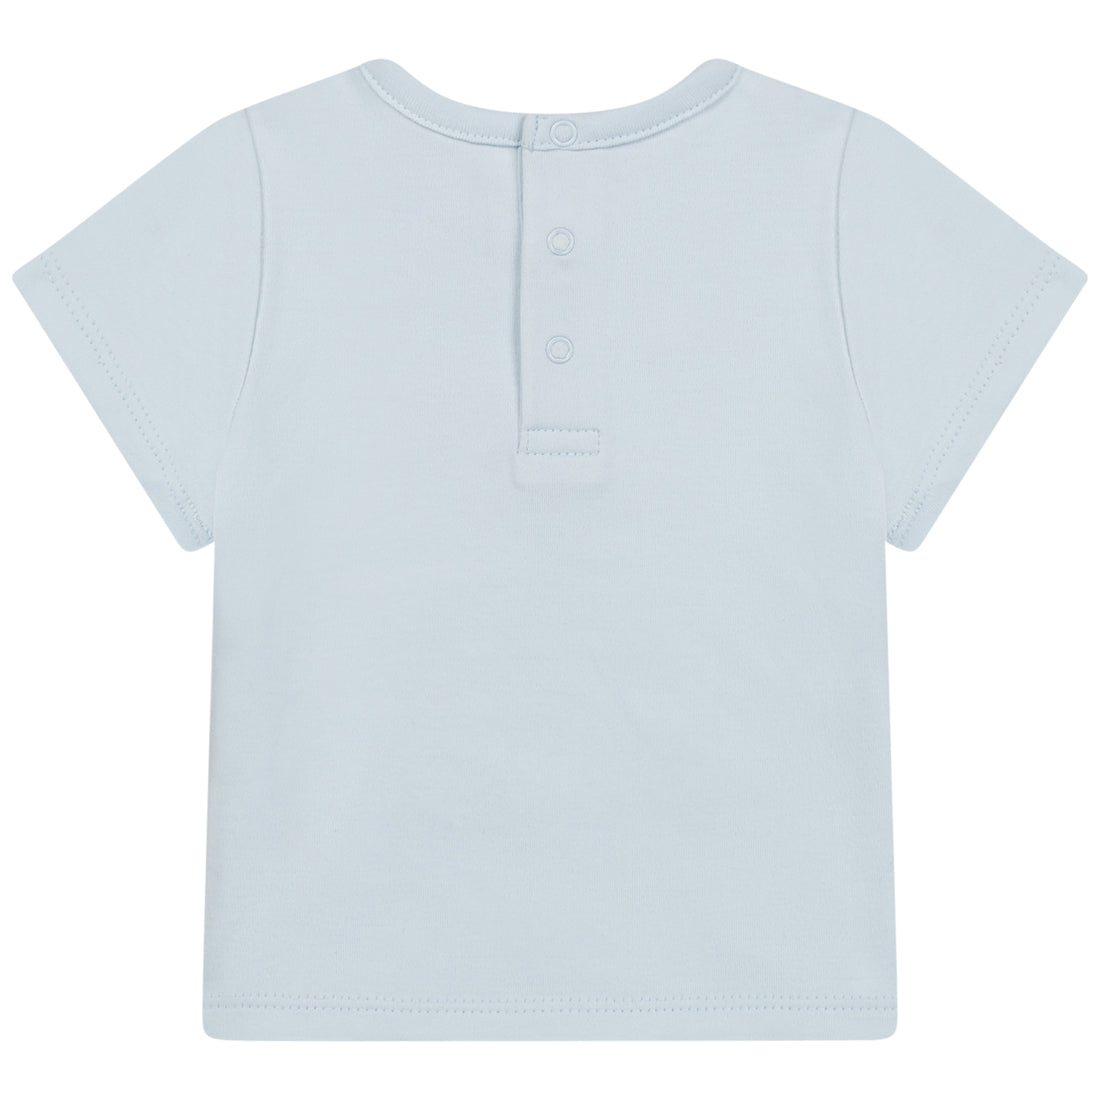 Jacob T-Shirt+Shorts Style: W98146